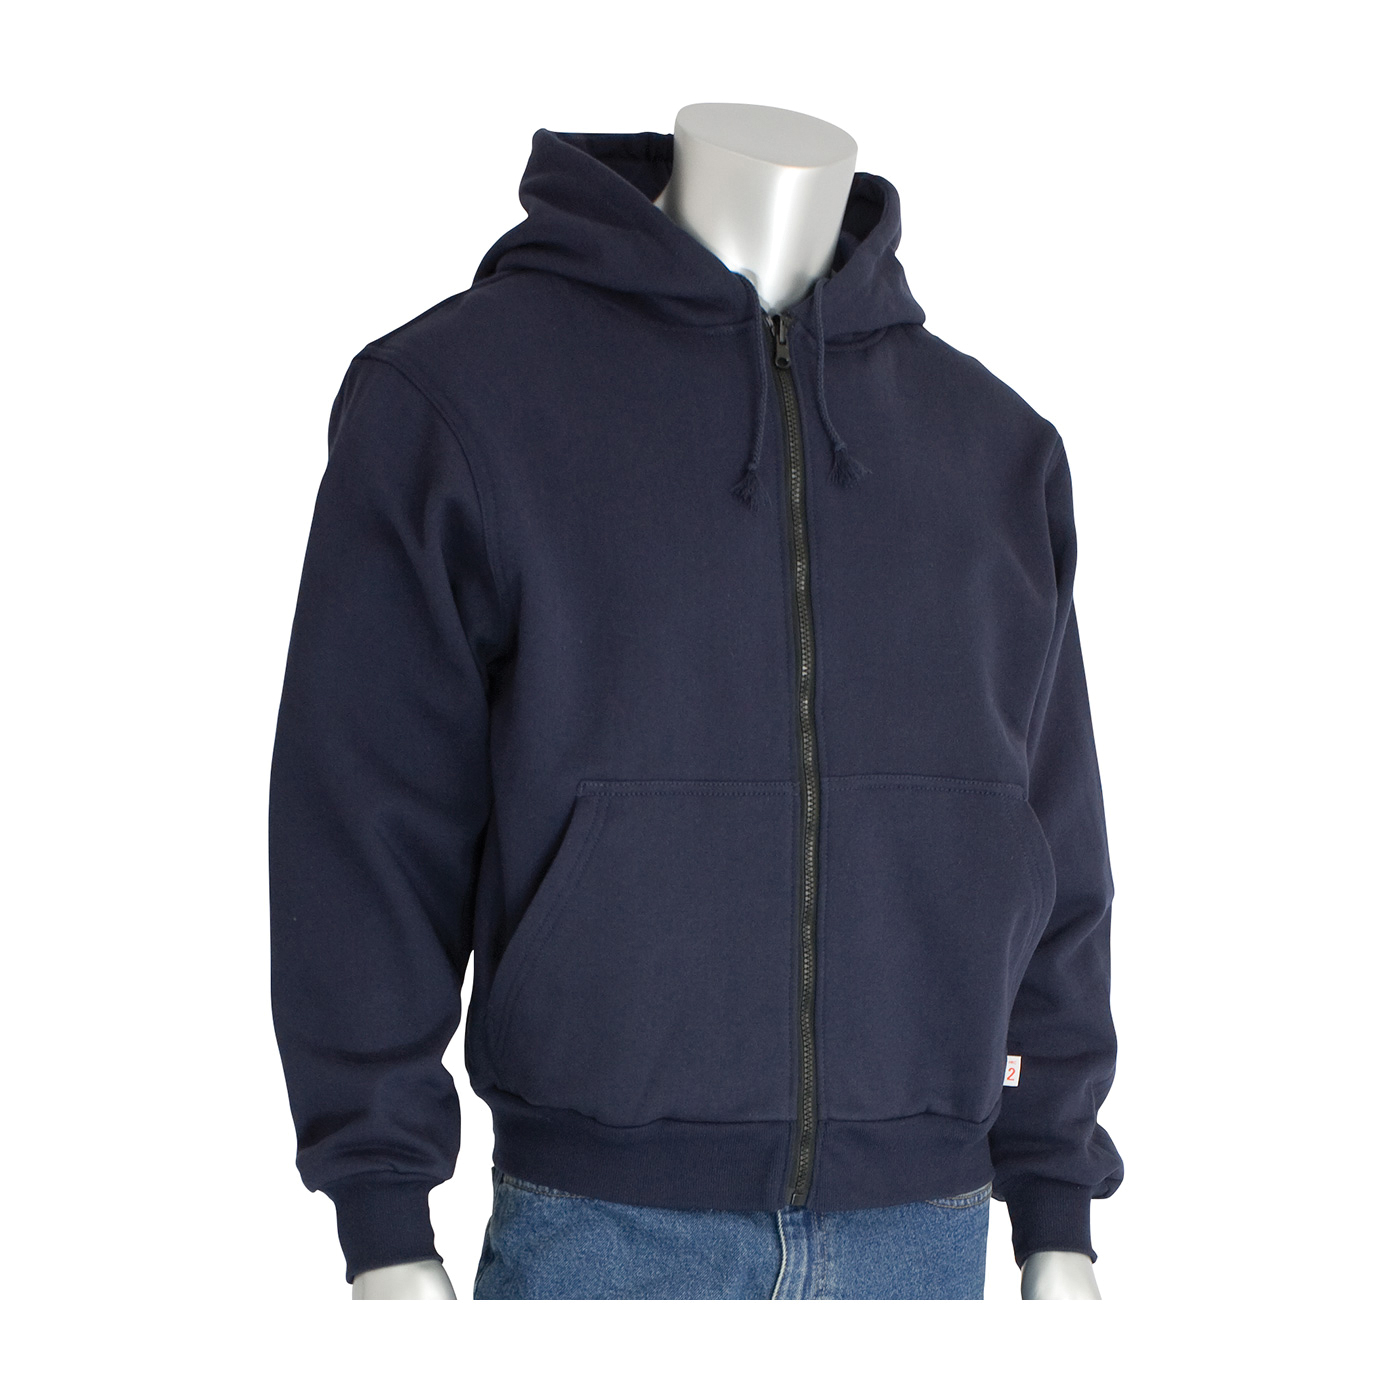 PIP® 385-FRZH-NV/3X Polartec® 385-FRZH Arc and Flame Resistant Sweatshirt, 3XL, Navy, FR Fleece Knit/100% Cotton, 31-1/2 in Regular, 32-1/2 in Tall L